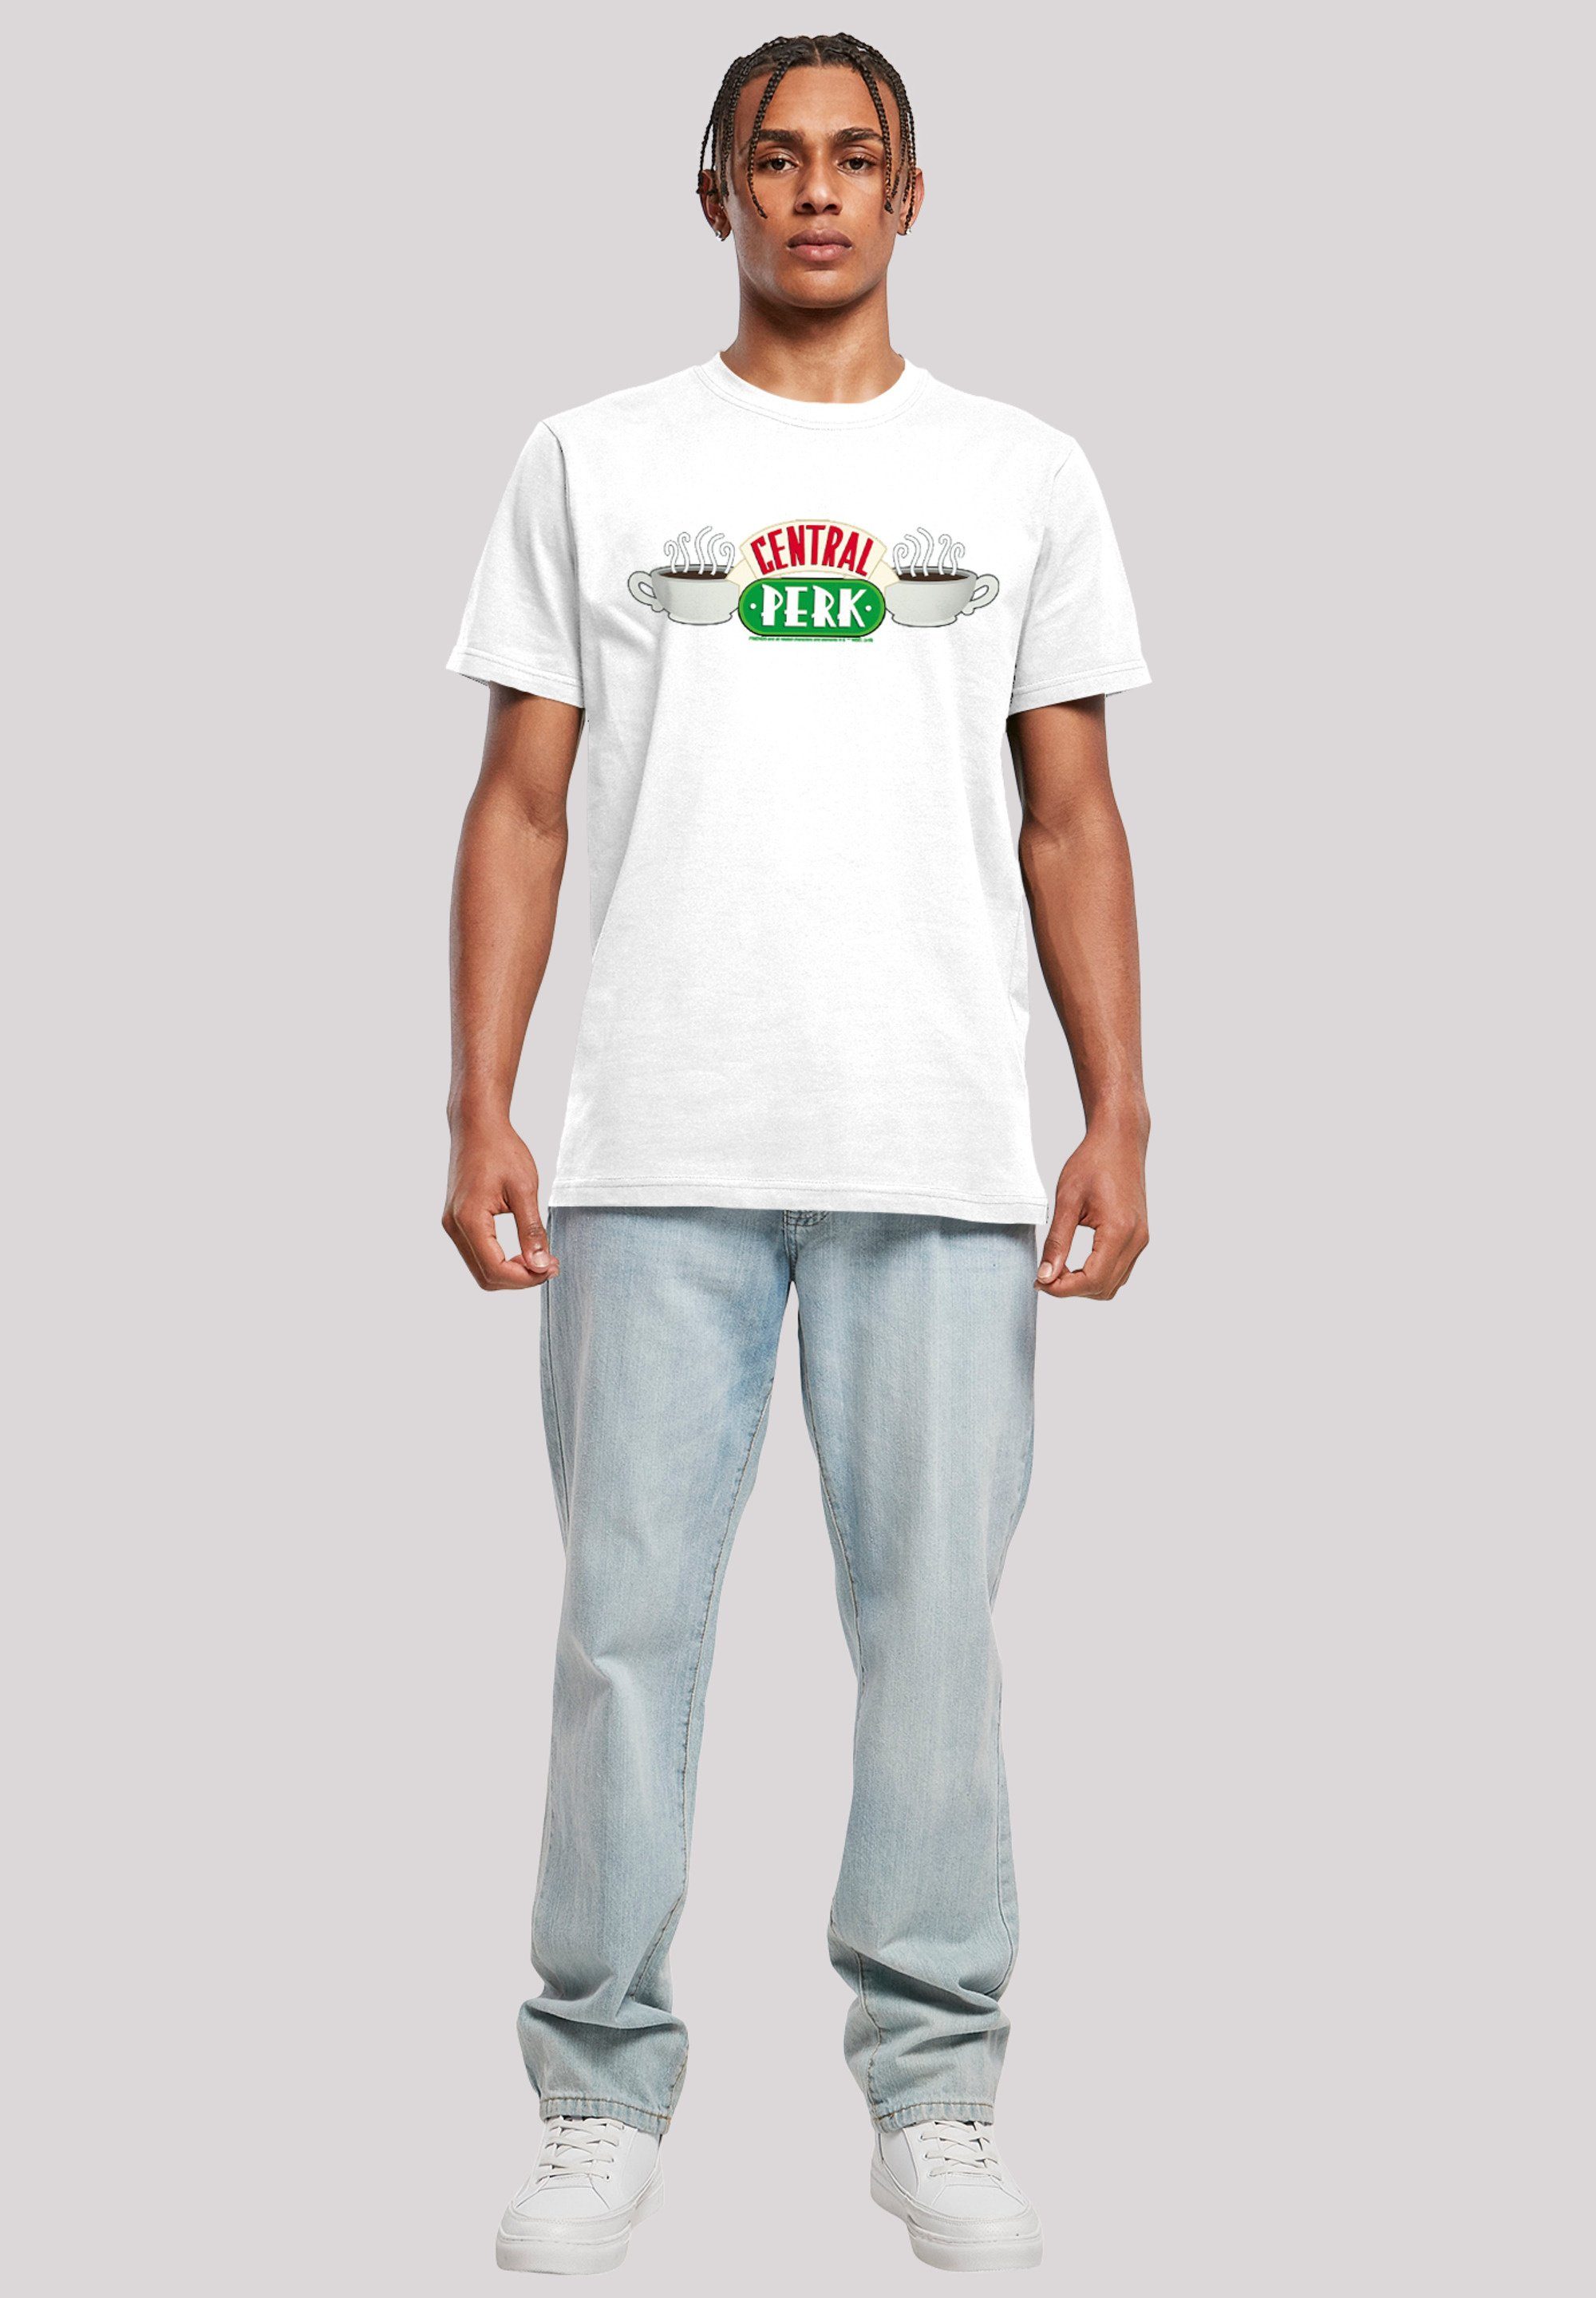 weiß Print Serie Perk FRIENDS Central BLK T-Shirt F4NT4STIC TV